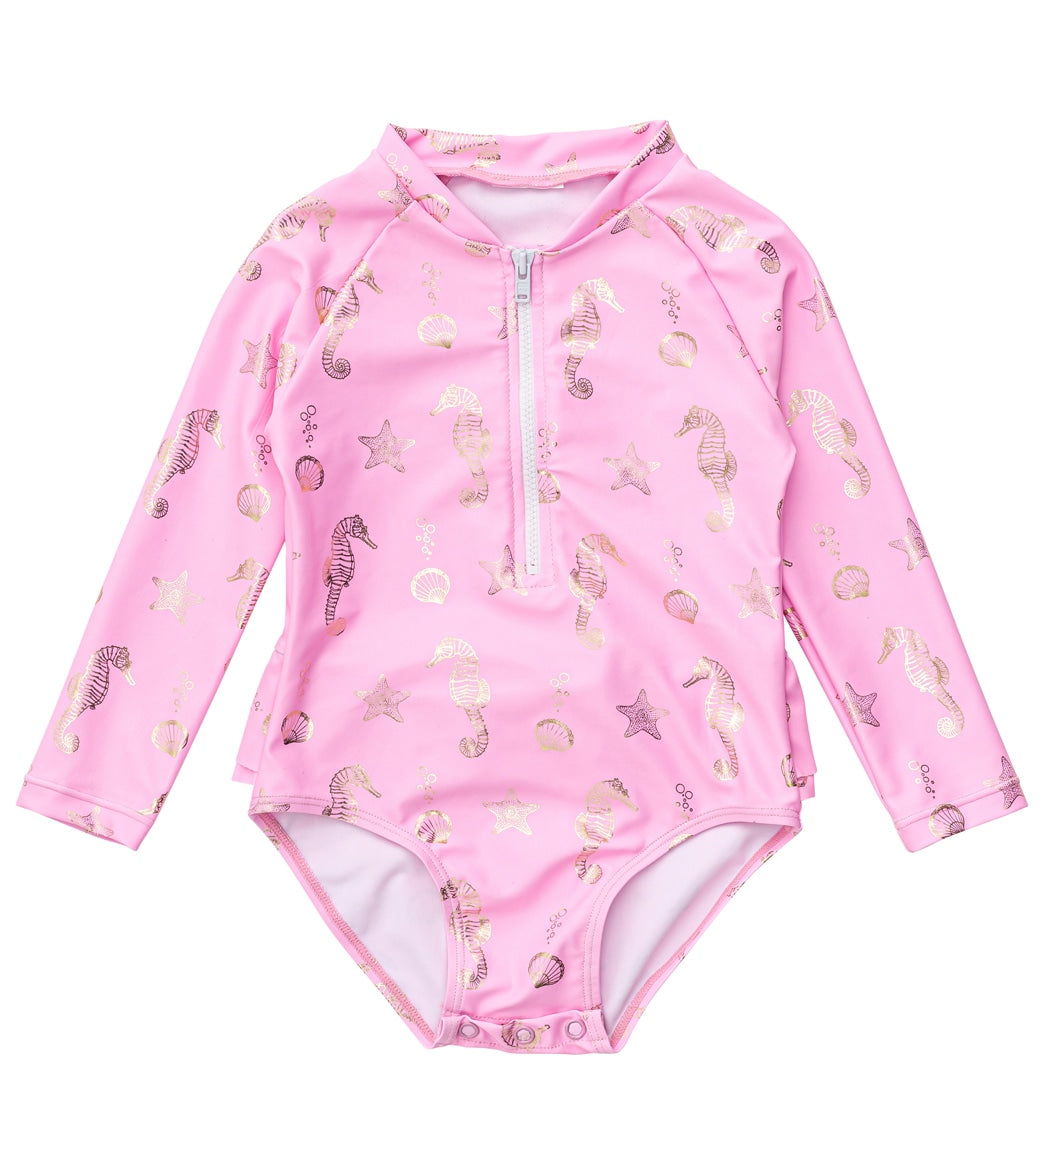 Snapper Rock Girls Seahorse Sparkle LS Surf Suit (Baby, Toddler, Little Kid)